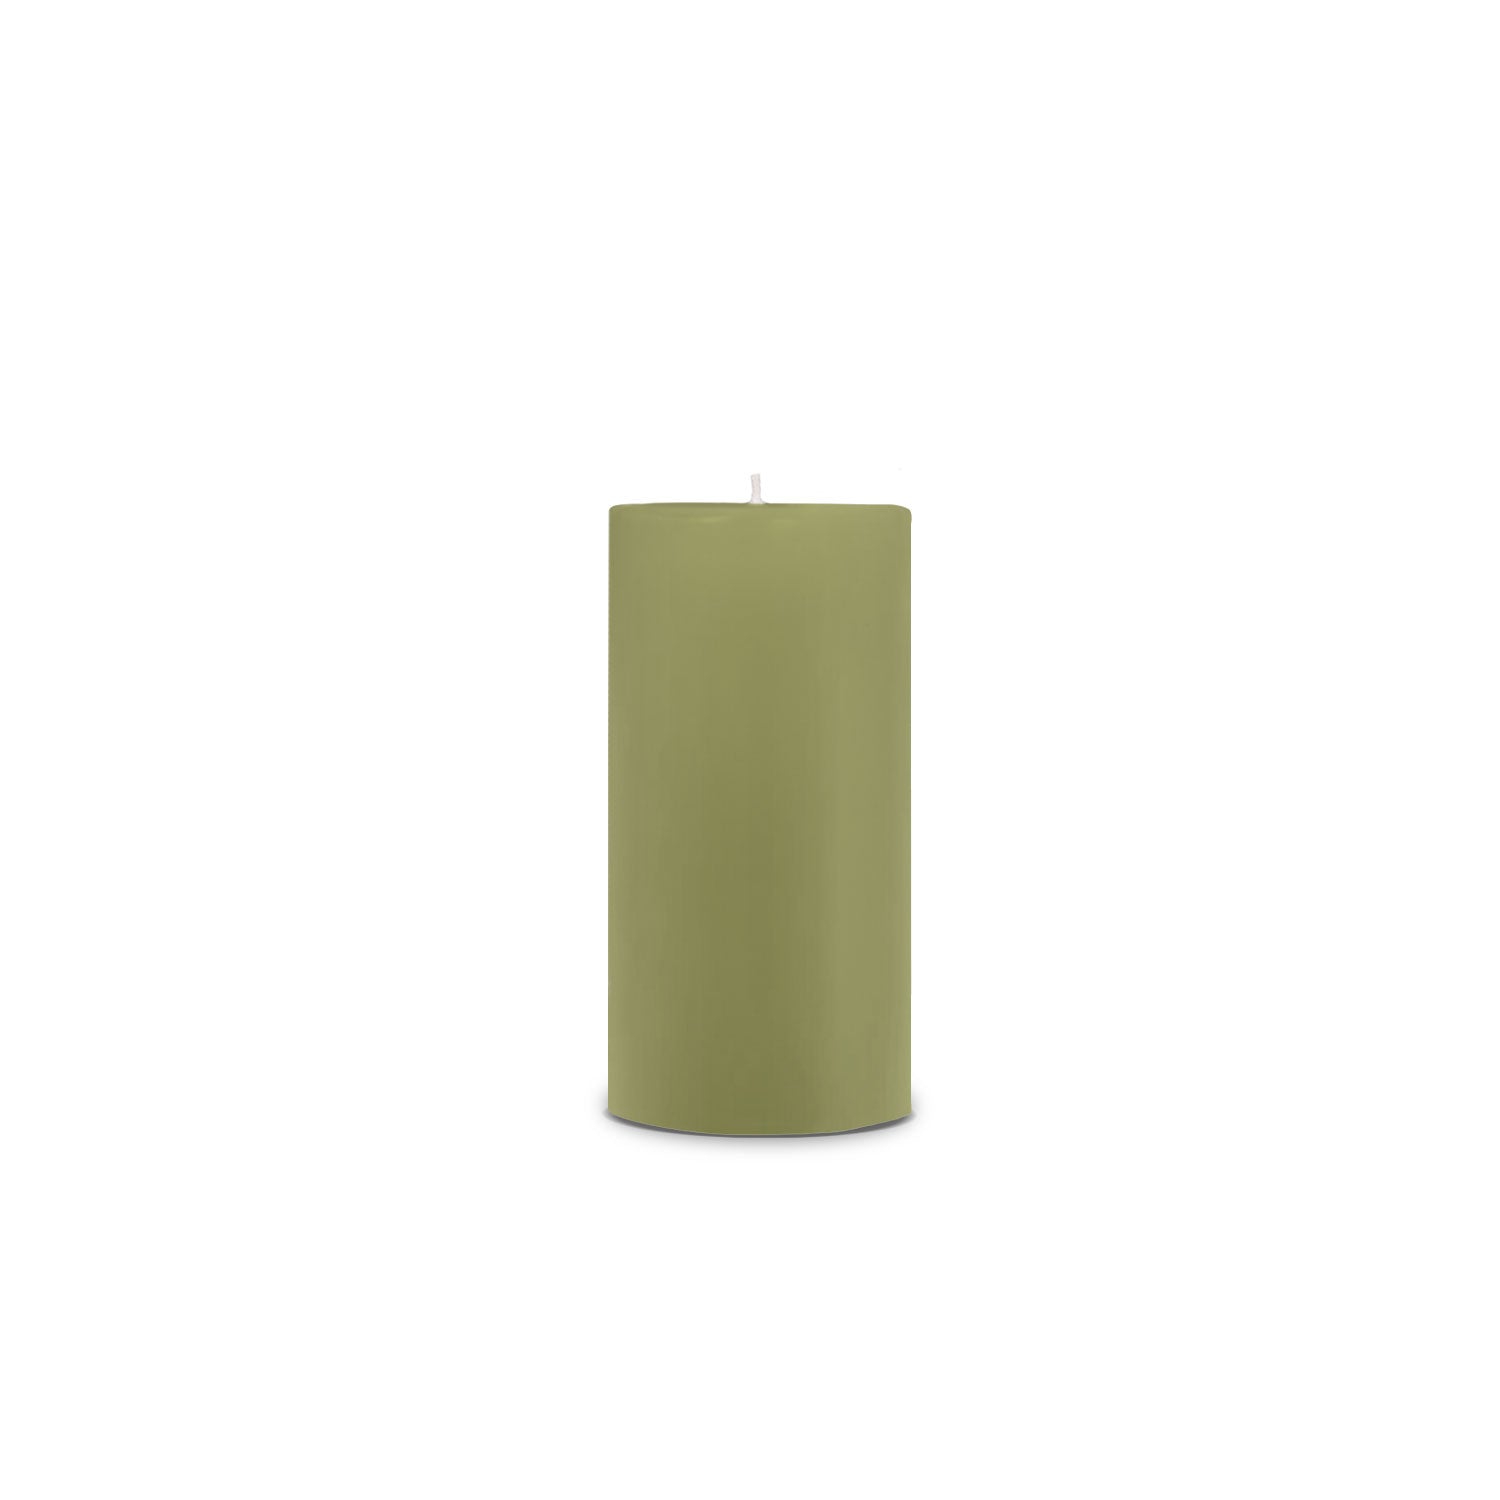 2"x3" Petite Pillar Candle - desert olive